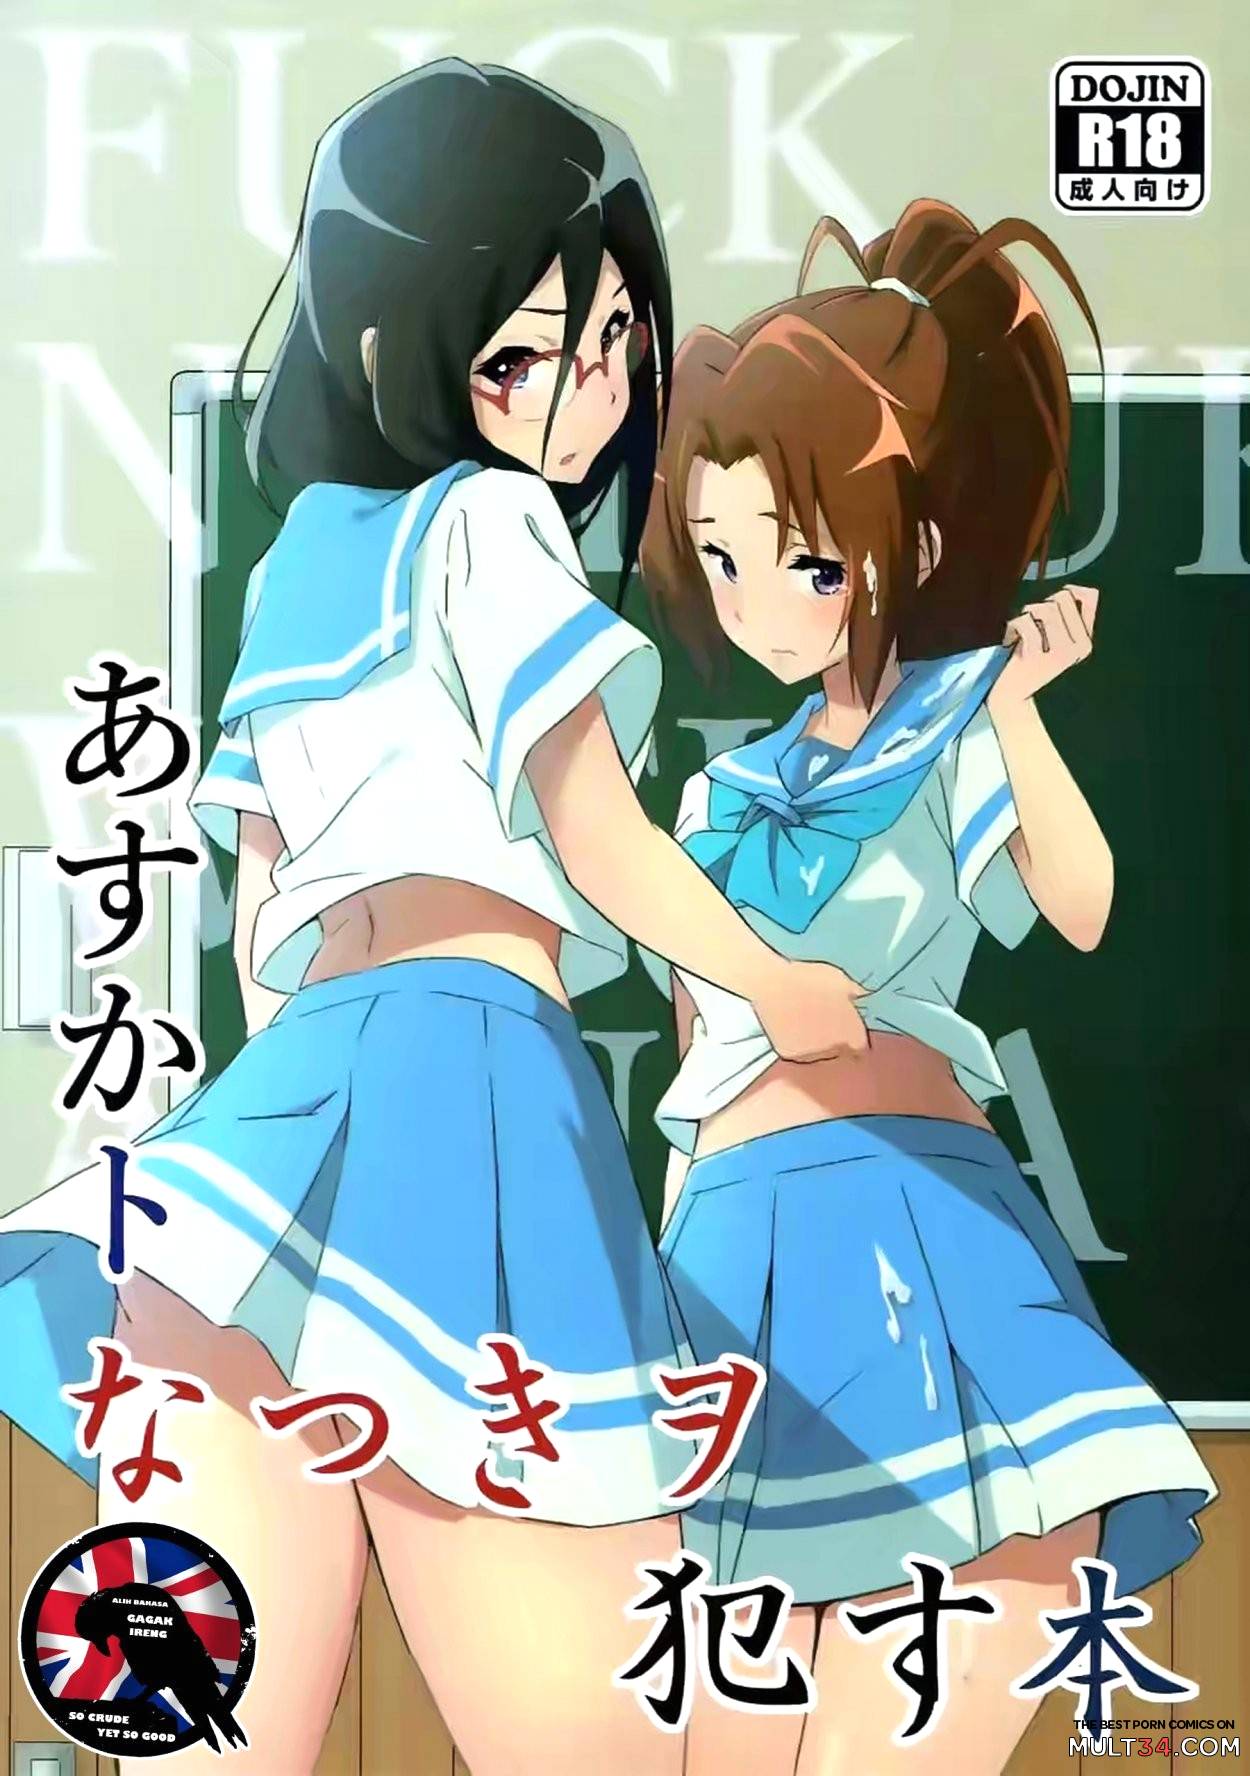 Www Xxx Hon Com - Asuka to Natsuki o Okasu Hon porn comic - the best cartoon porn comics,  Rule 34 | MULT34